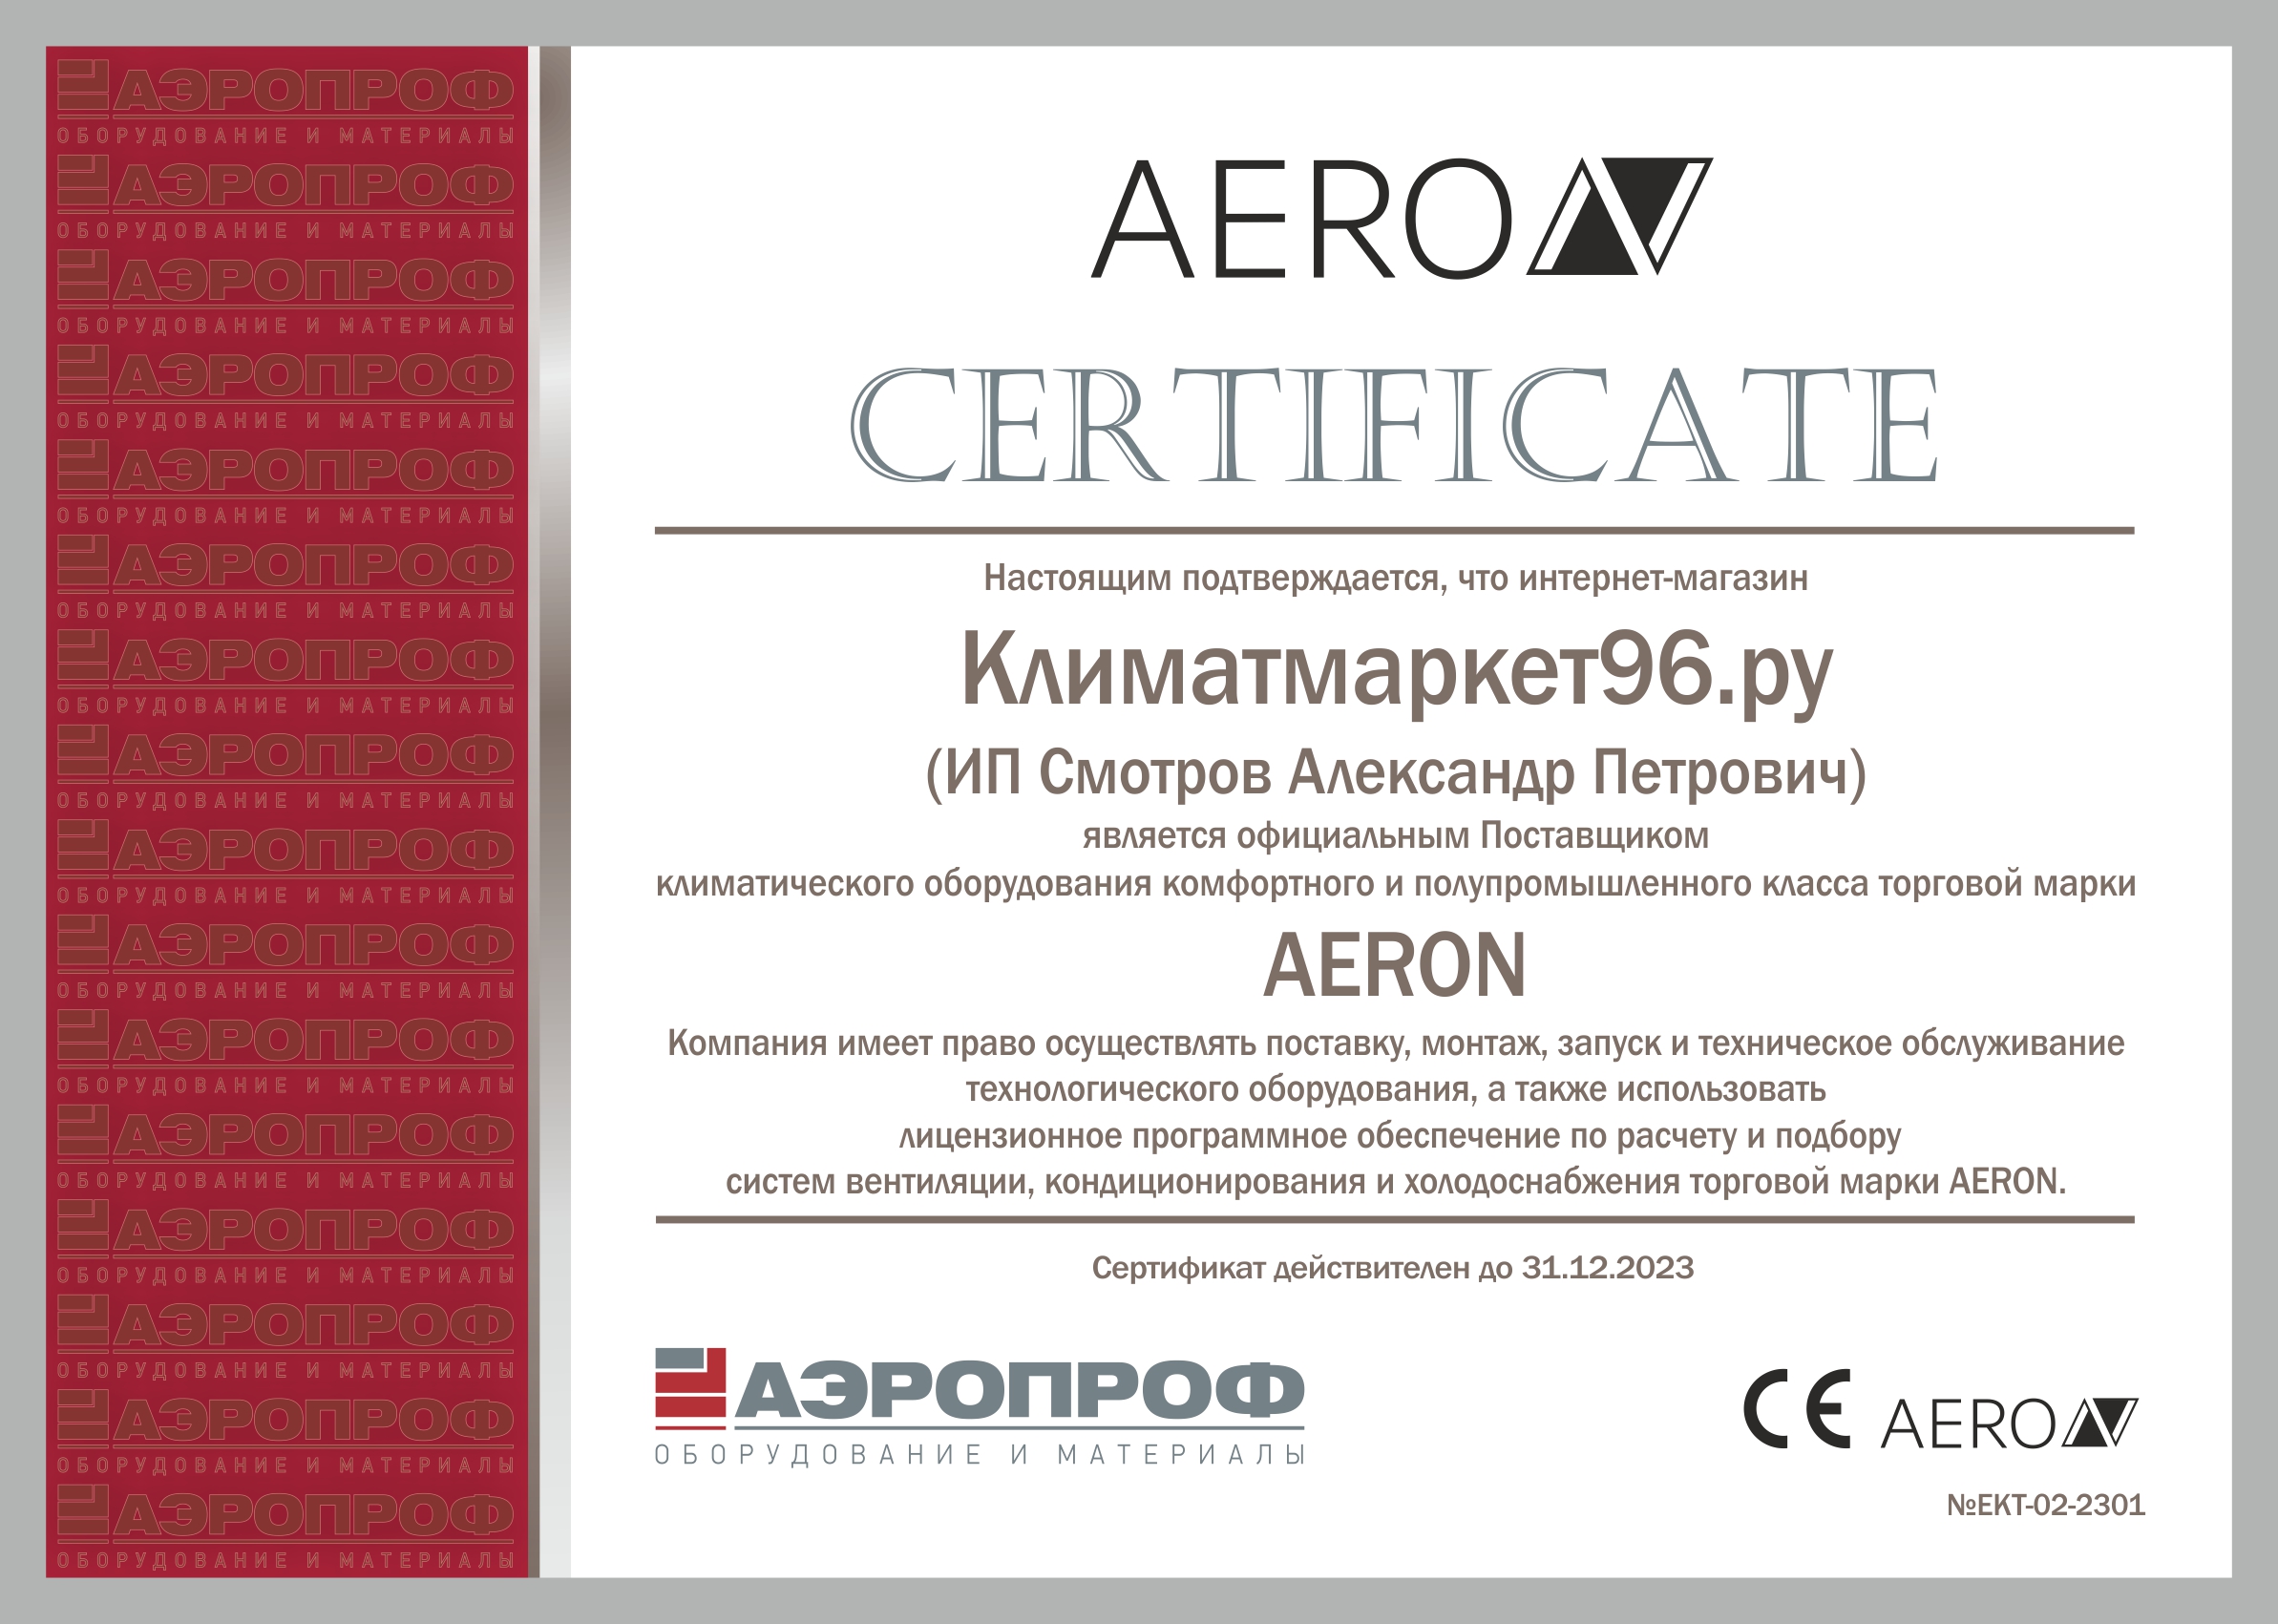 sert23-km96-aeron Kondicioner Aero ARS-II-12IHN21D6-01/ARS-II-12OHN21D6-01 kypit v Ekaterinbyrge v internet-magazine KlimatMarket96.ry Сертификат официального дилера